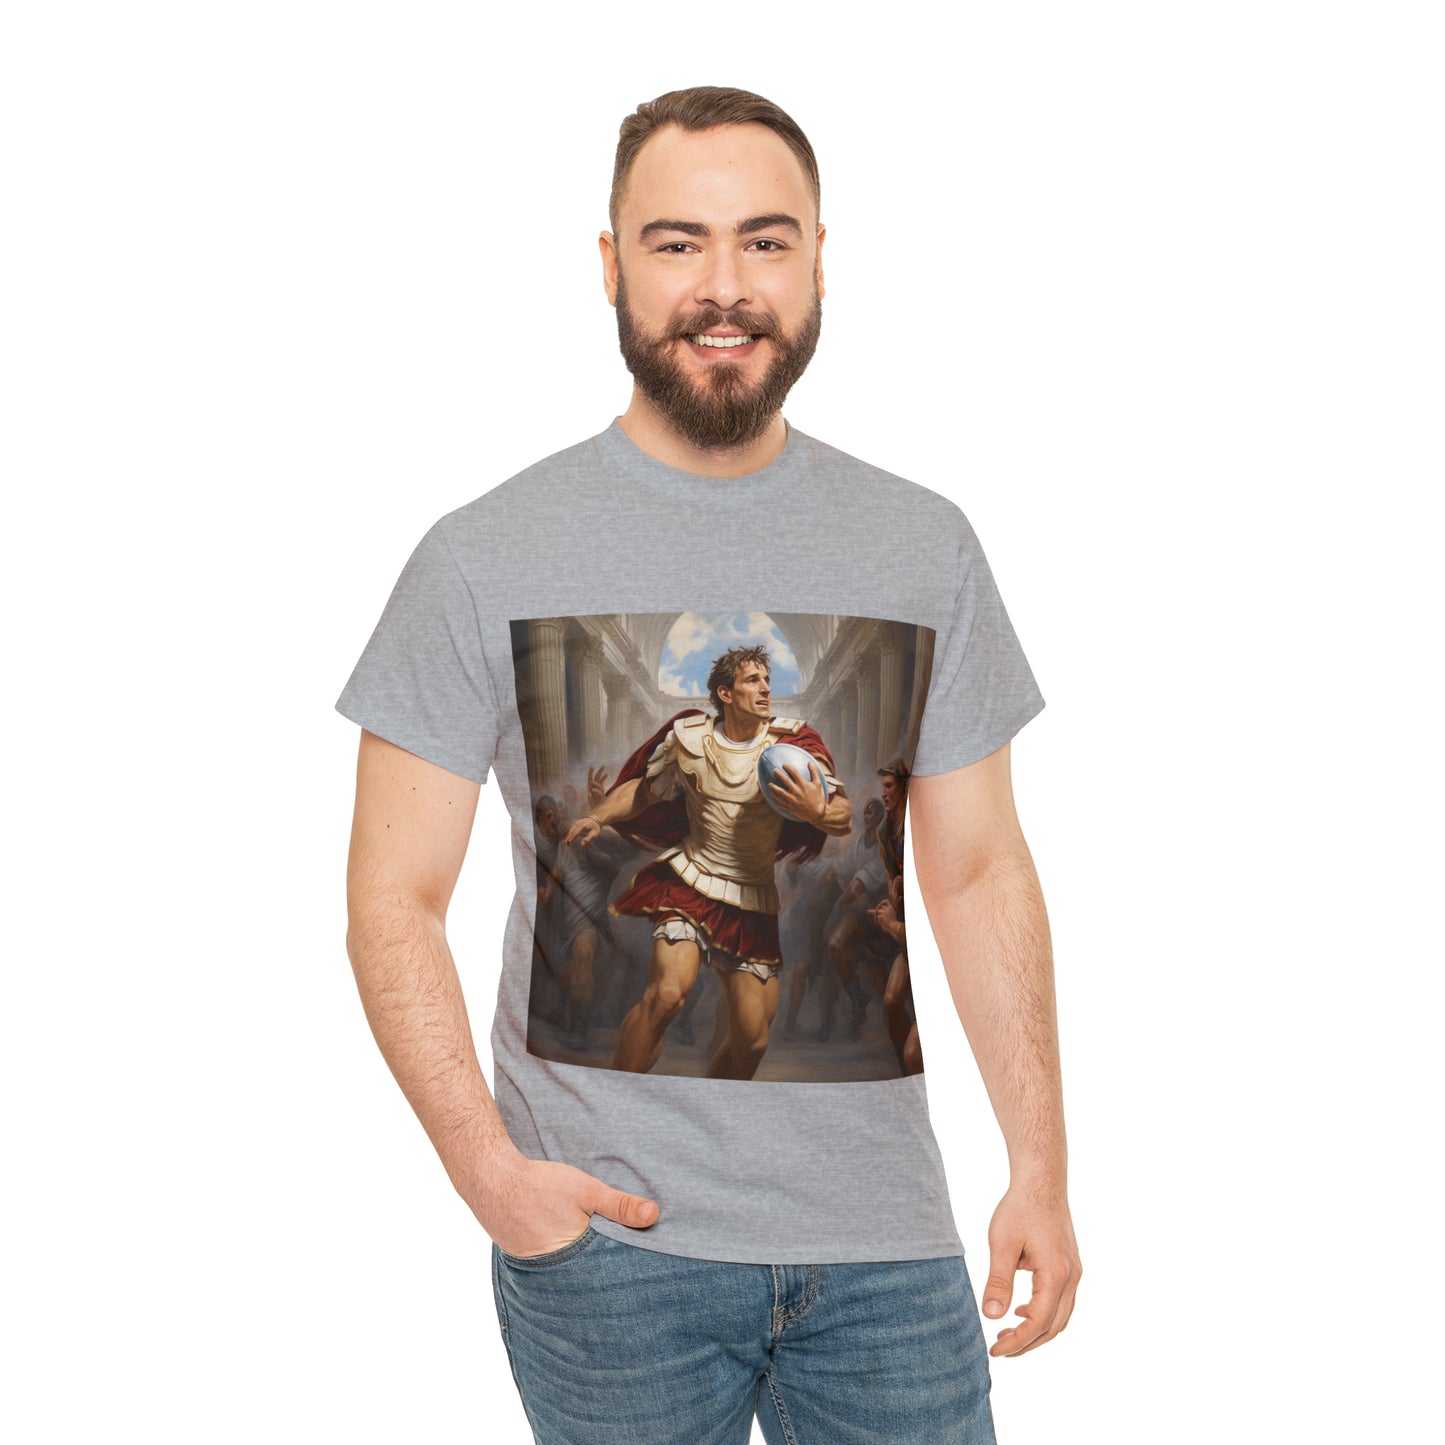 Caesar Rugby - light shirts